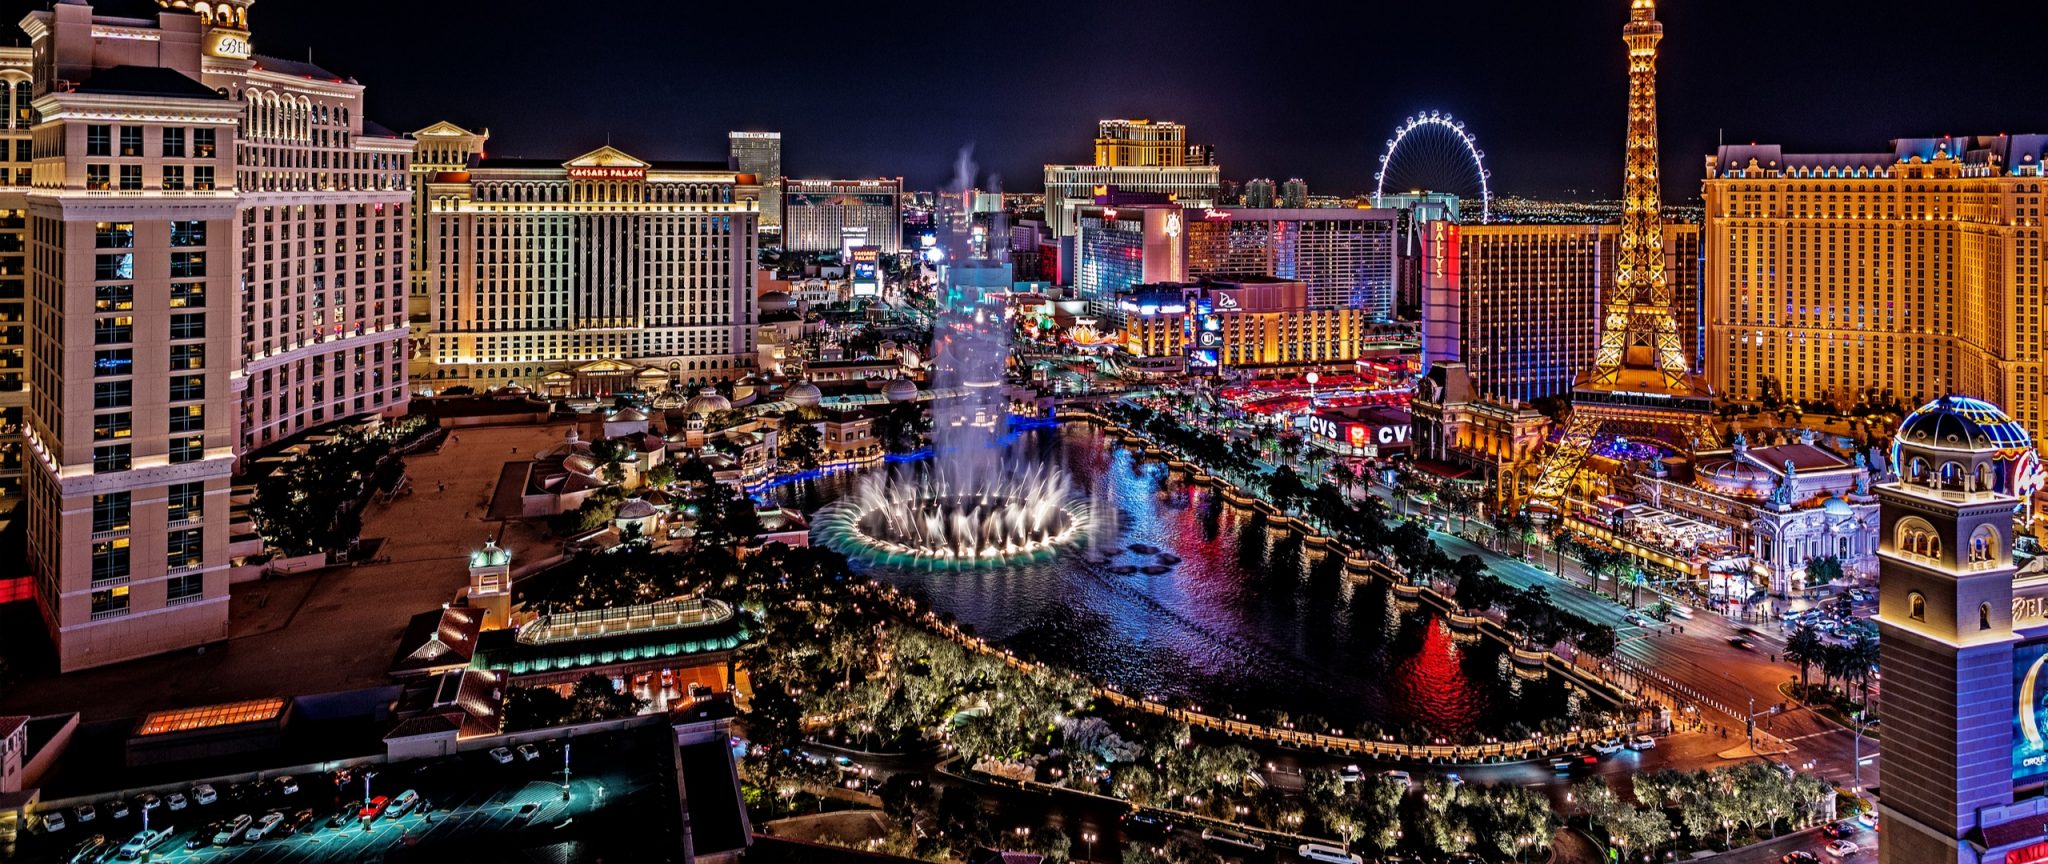 The 6 Best Themed Hotels in Las Vegas | SmashCasinos.com